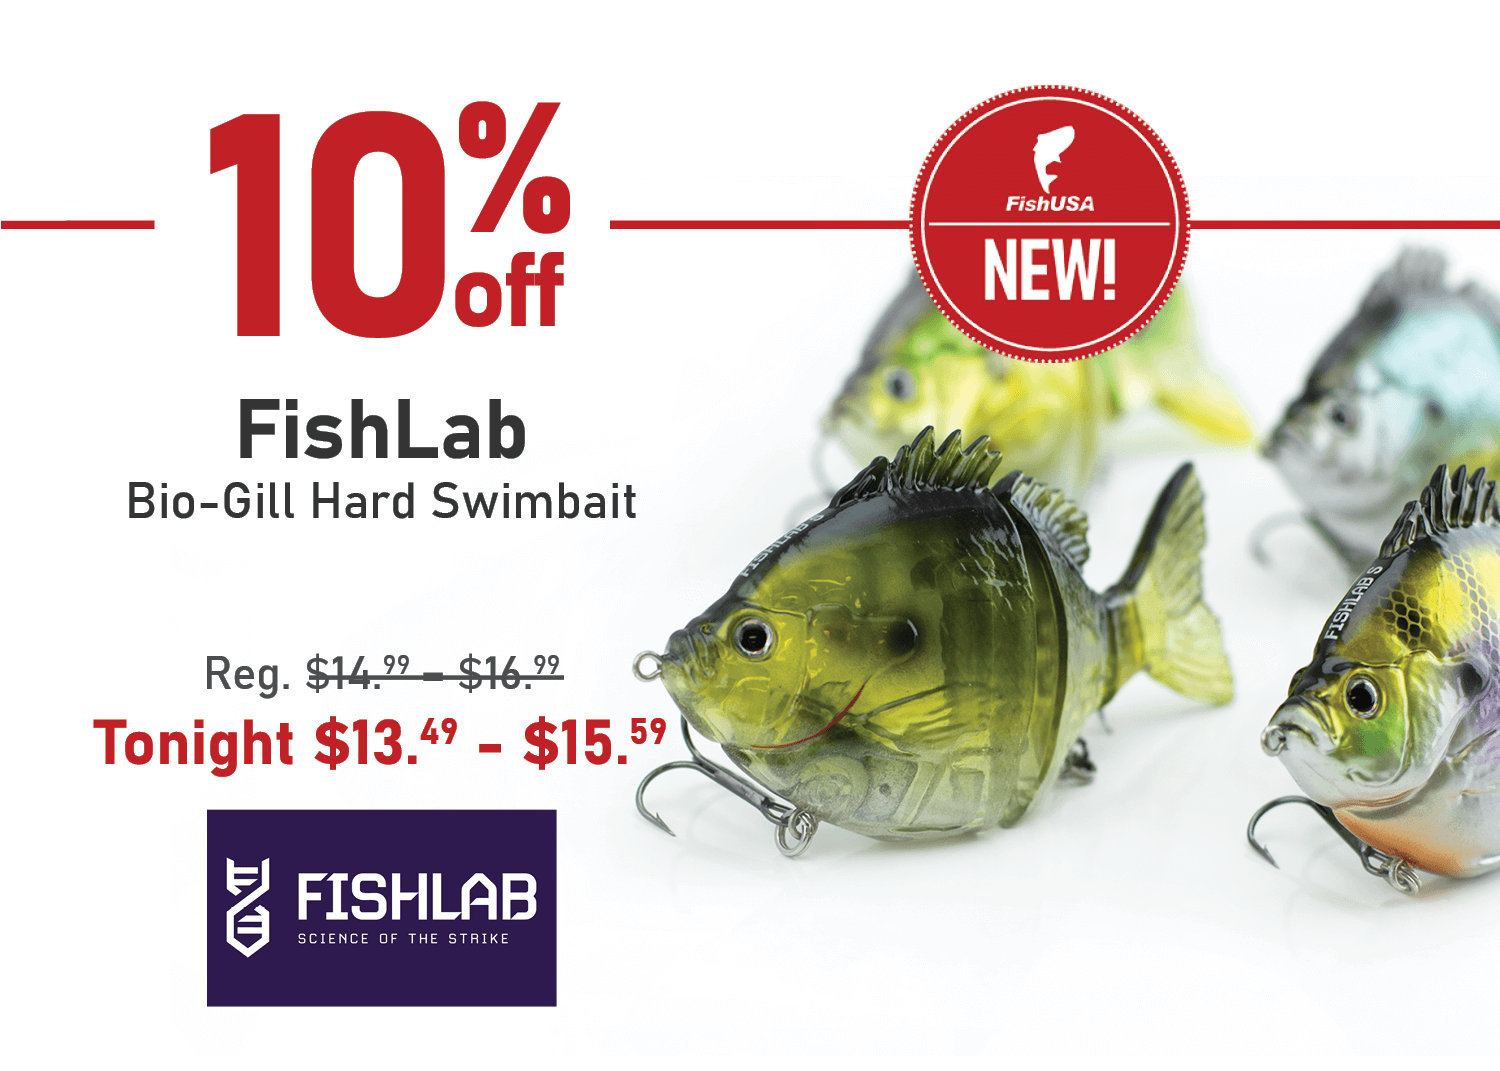 Save 10% on the FishLab Bio-Gill Hard Swimbait